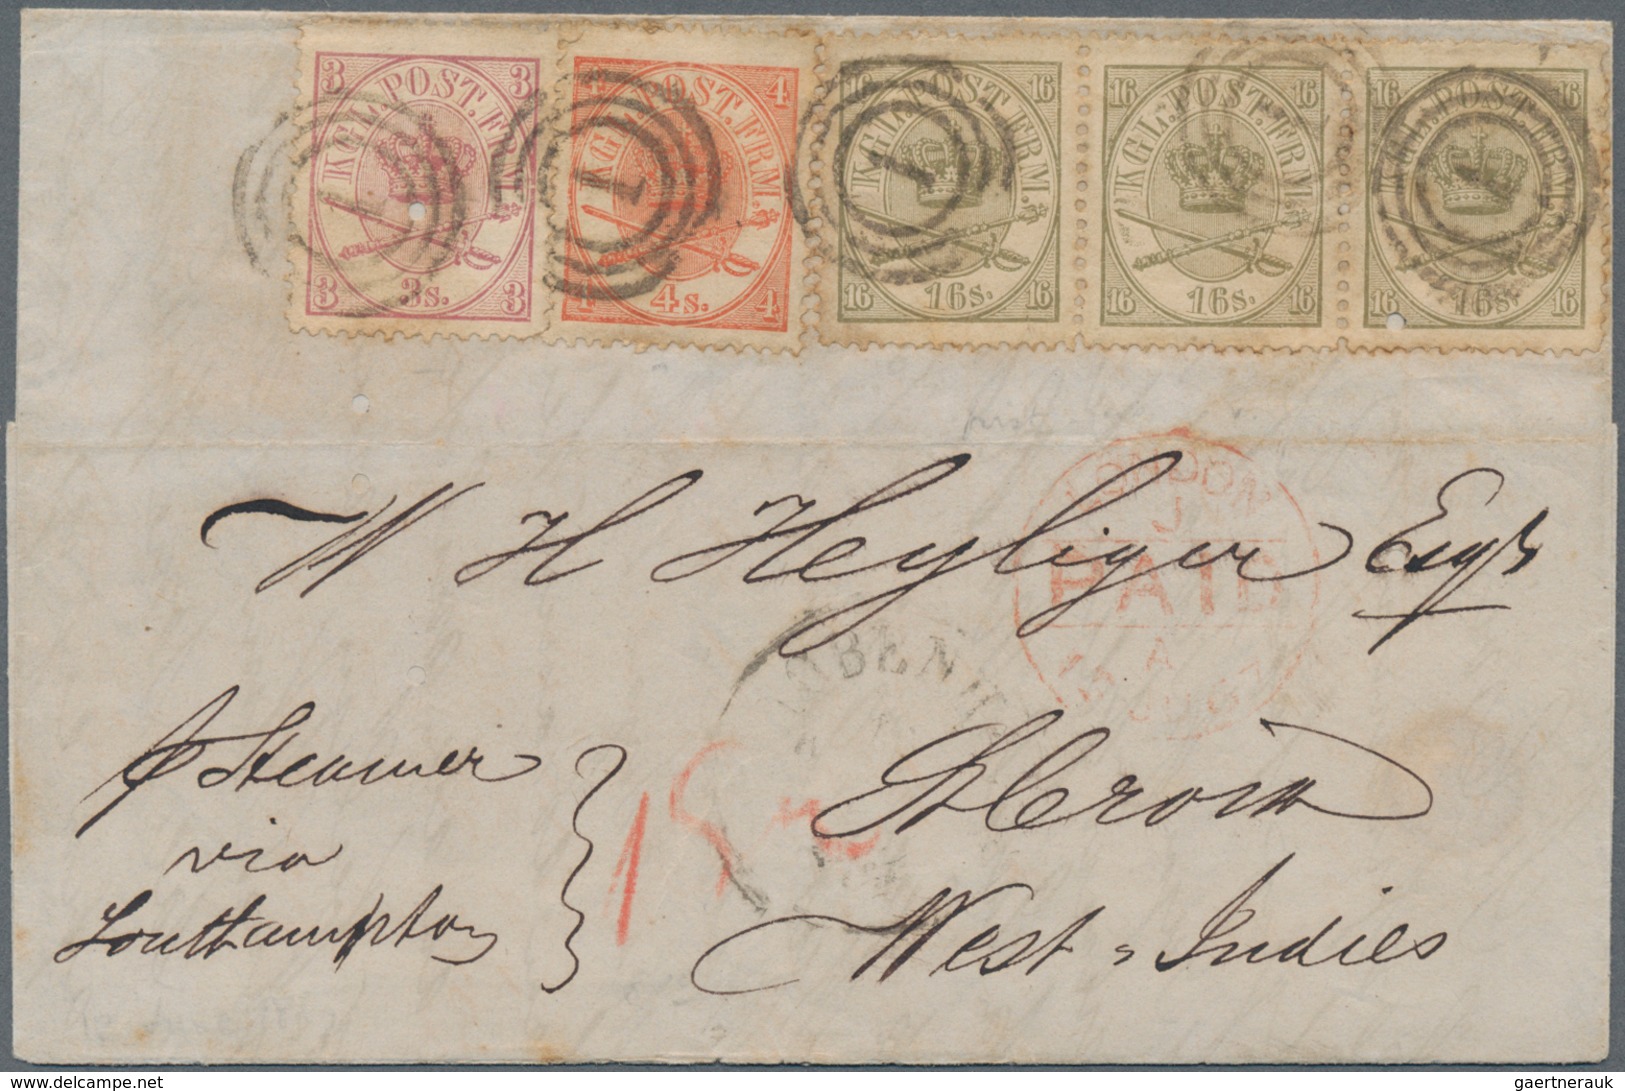 Dänisch-Westindien: 1867 Cover From Copenhagen To St. Croix, Danish West Indies 'Pr Steamer Via Sout - Deens West-Indië